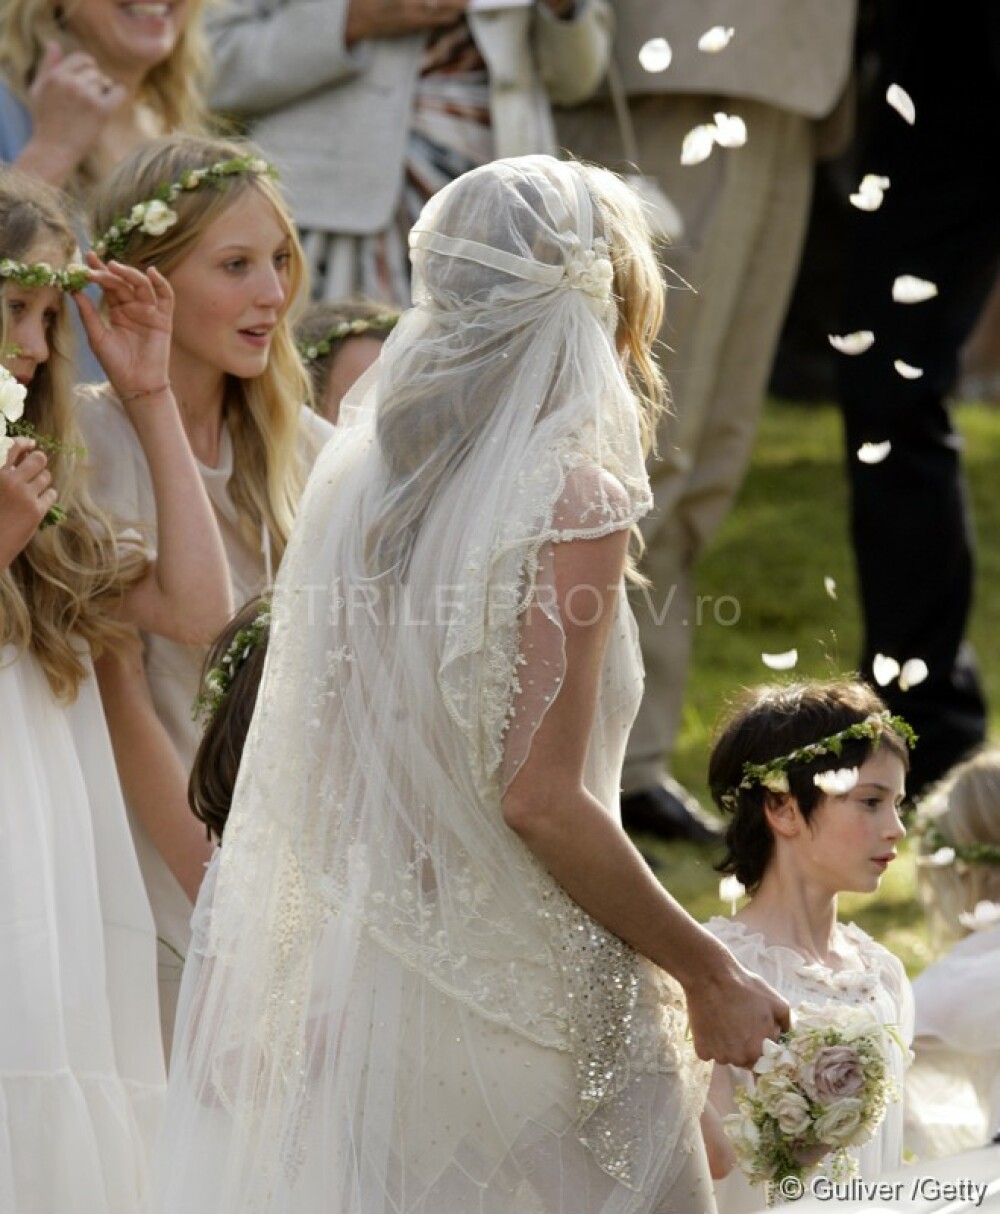 Fite de diva. Kate Moss a inchis doua orase ca sa nu fie deranjata la nunta. GALERIE FOTO - Imaginea 2